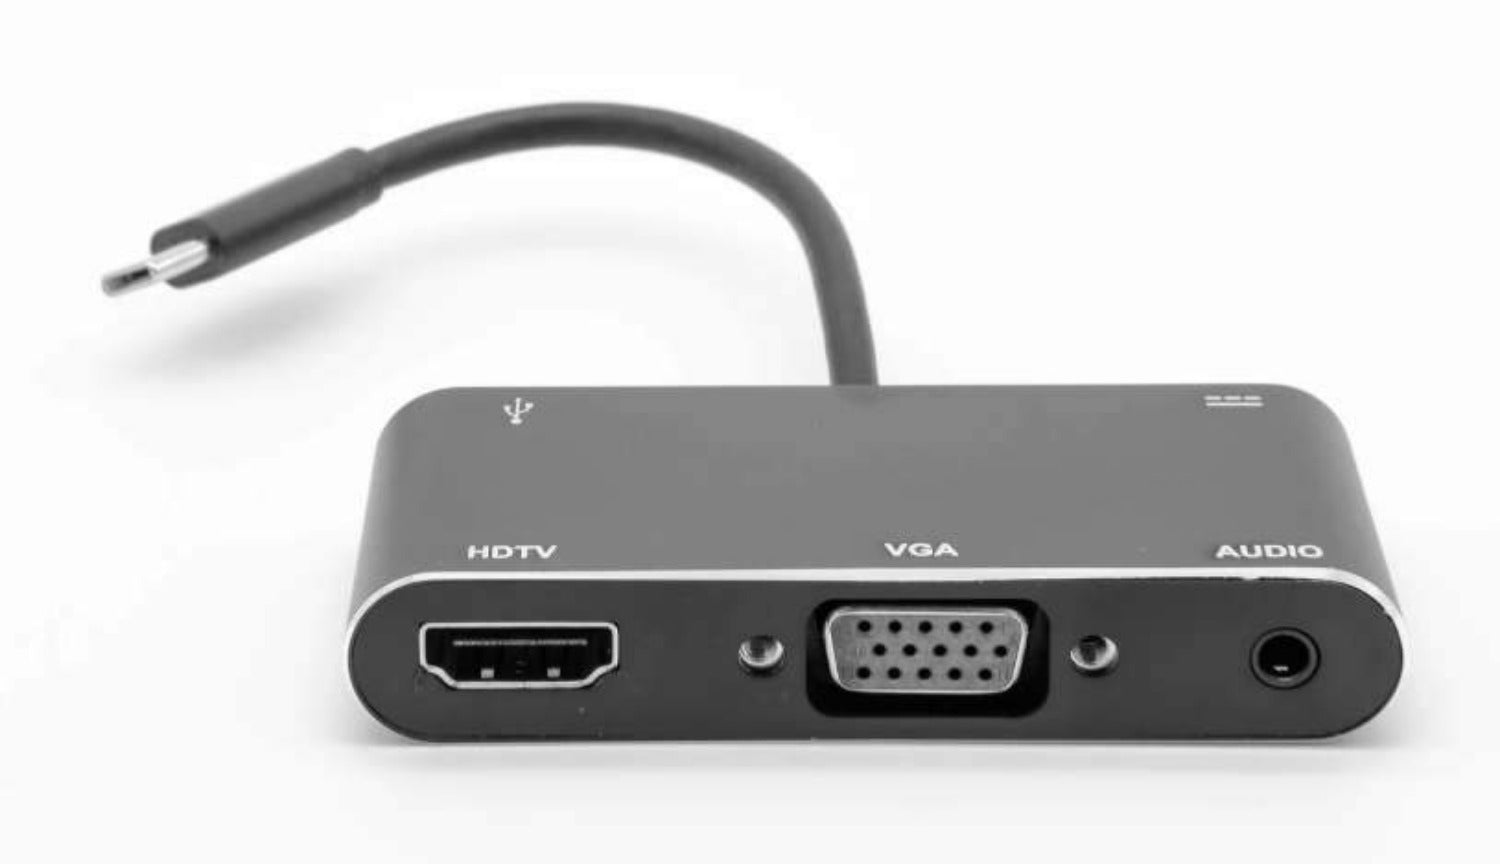 USB-C to VGA and HDMI